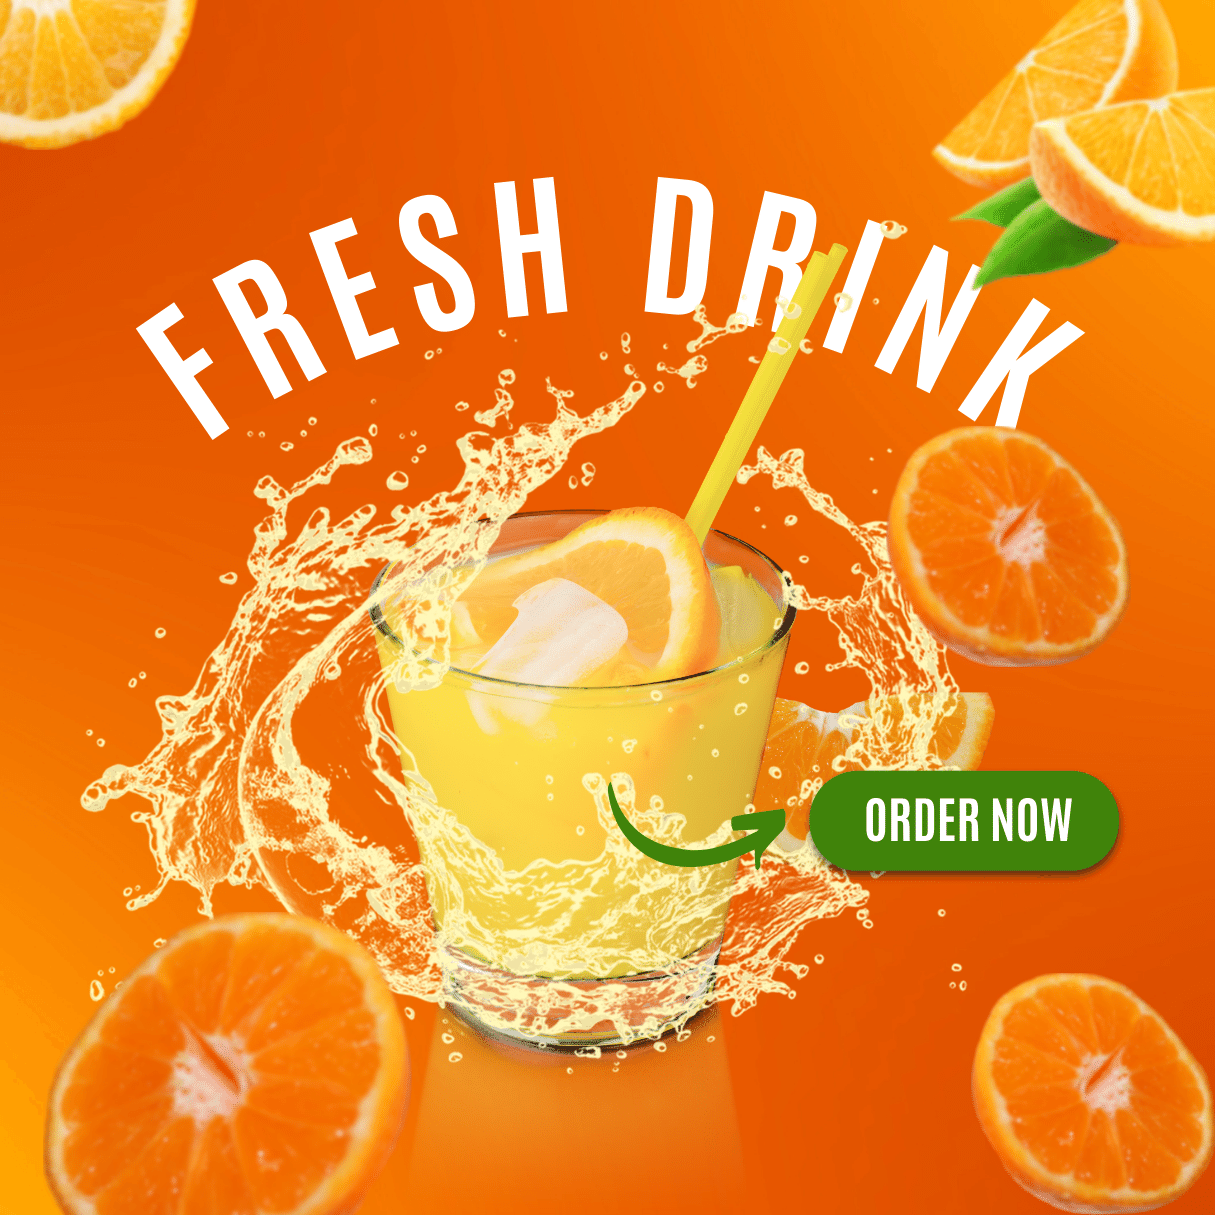 Orange Fresh Drink preview image.